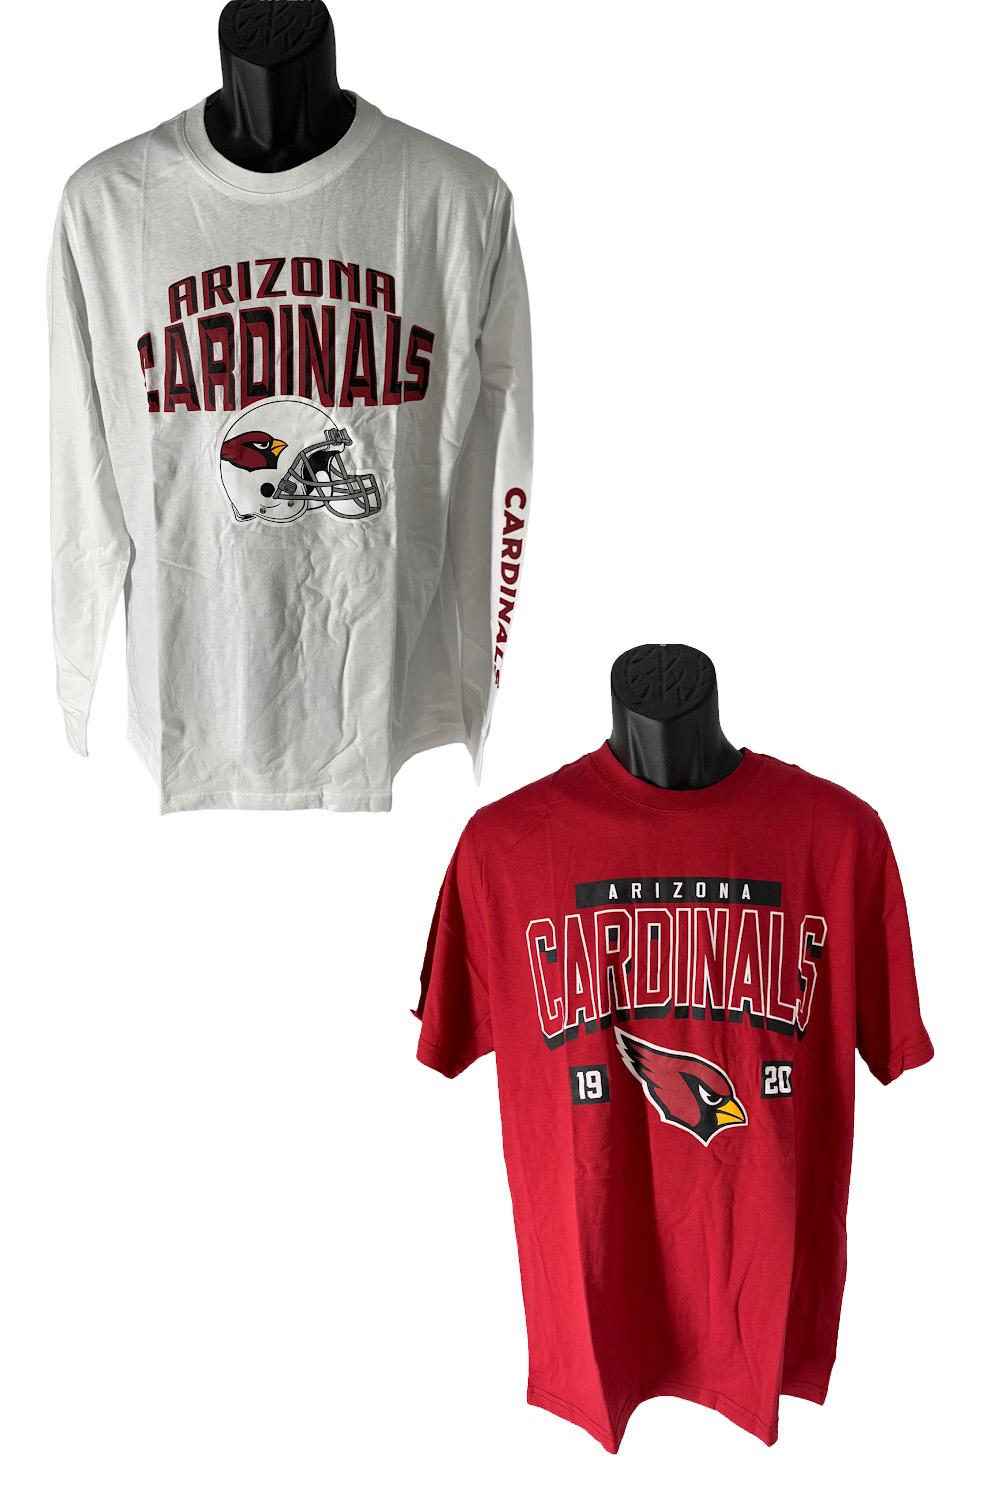 Arizona Cardinals Shirt Size Medium M Red Long Sleeve Graphic NFL Football  Men